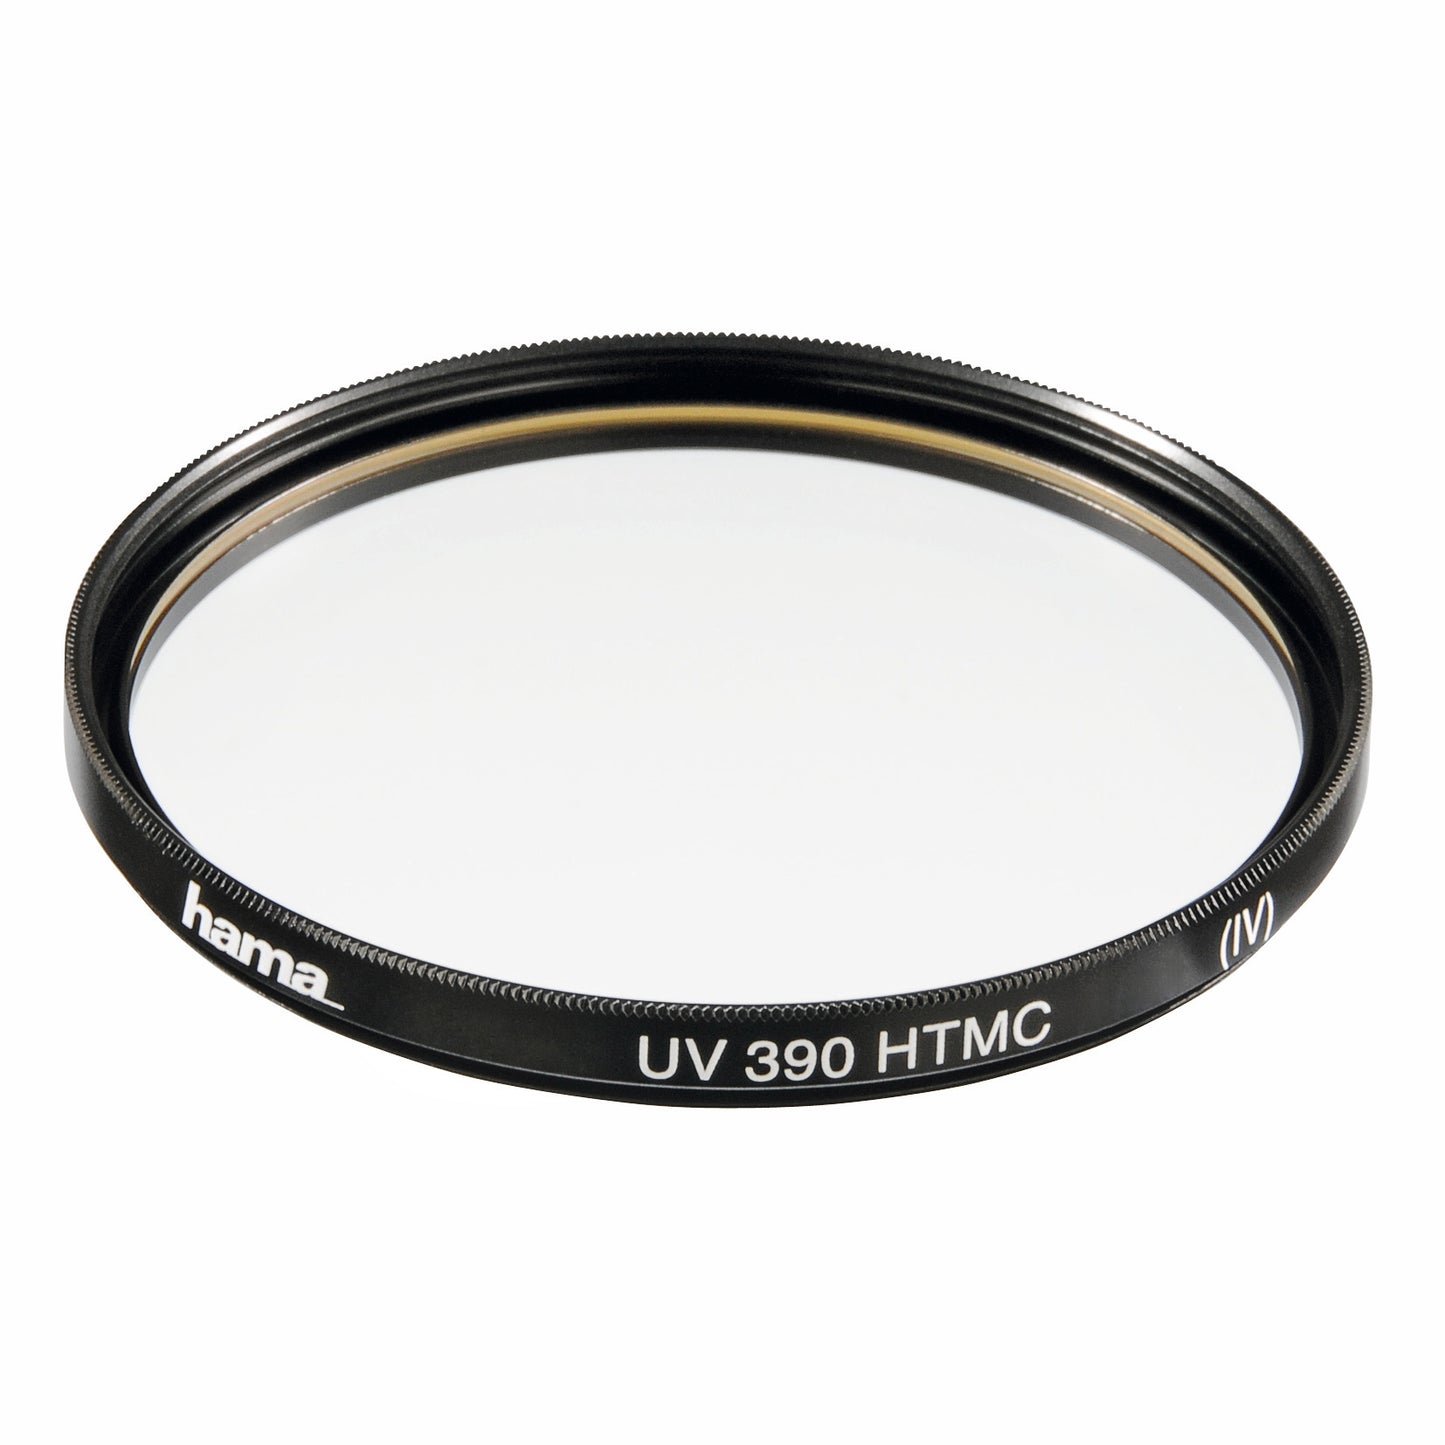 UV Filter 390, HTMC multi-coated, 72.0 mm